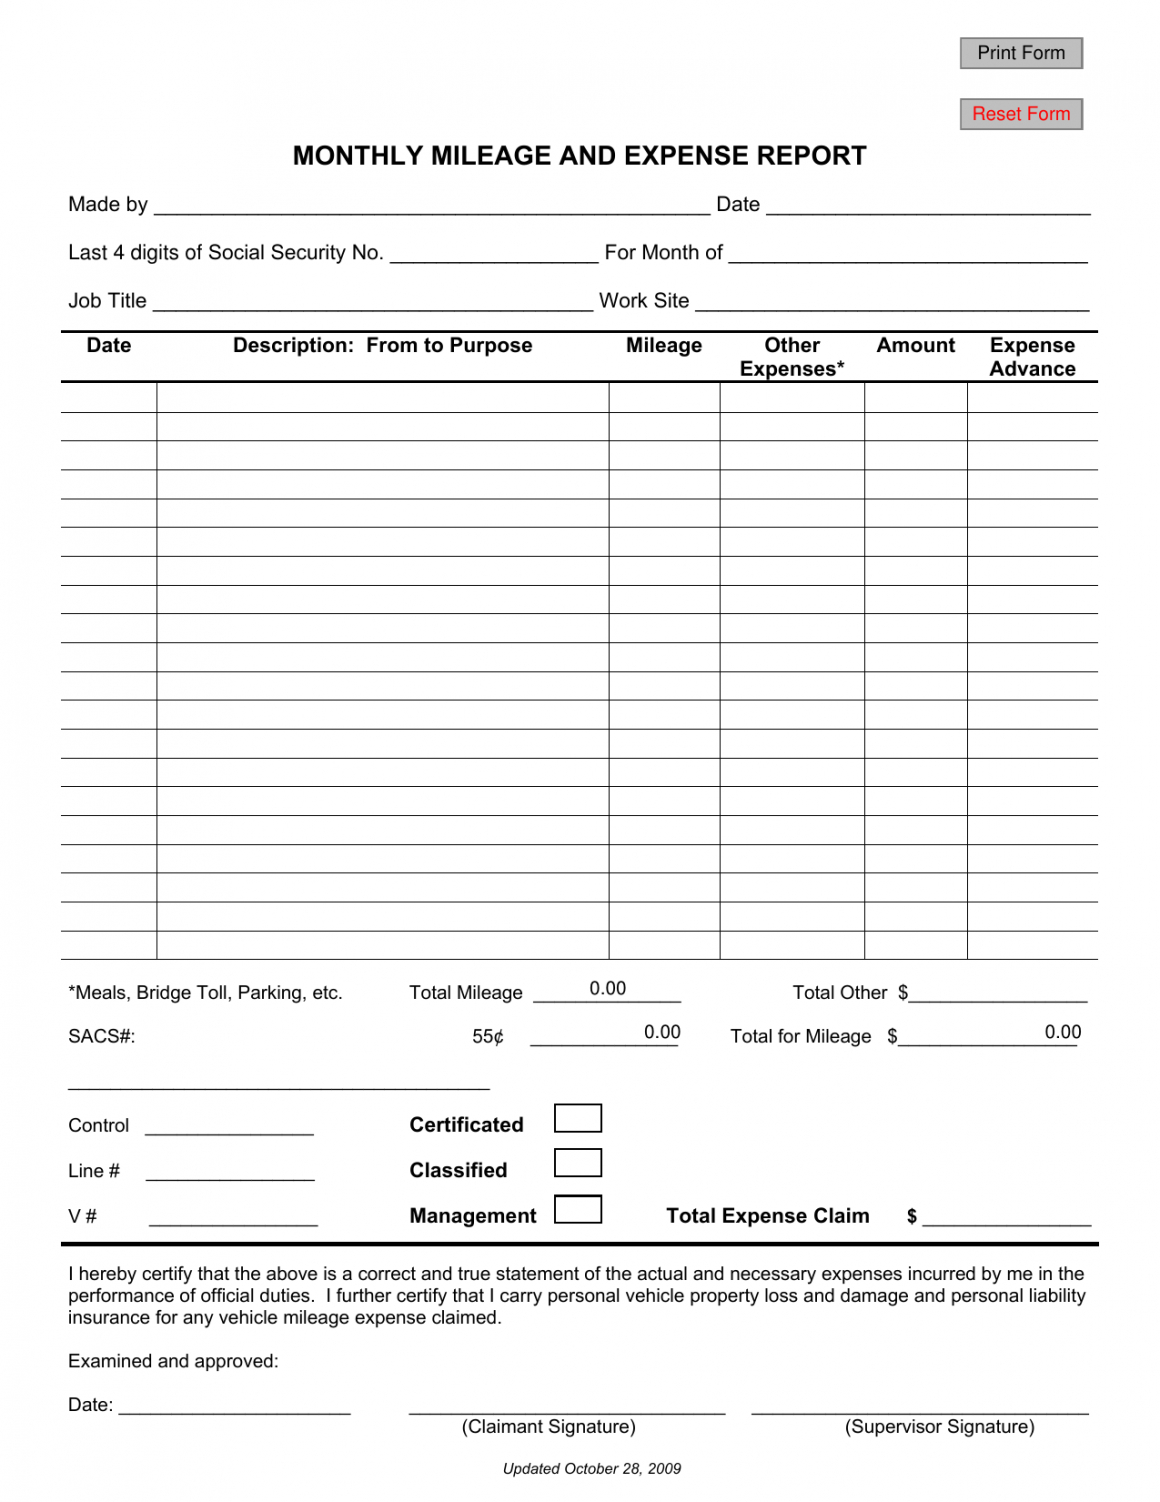 Costum Gas Mileage Reimbursement Form Template Excel Sample